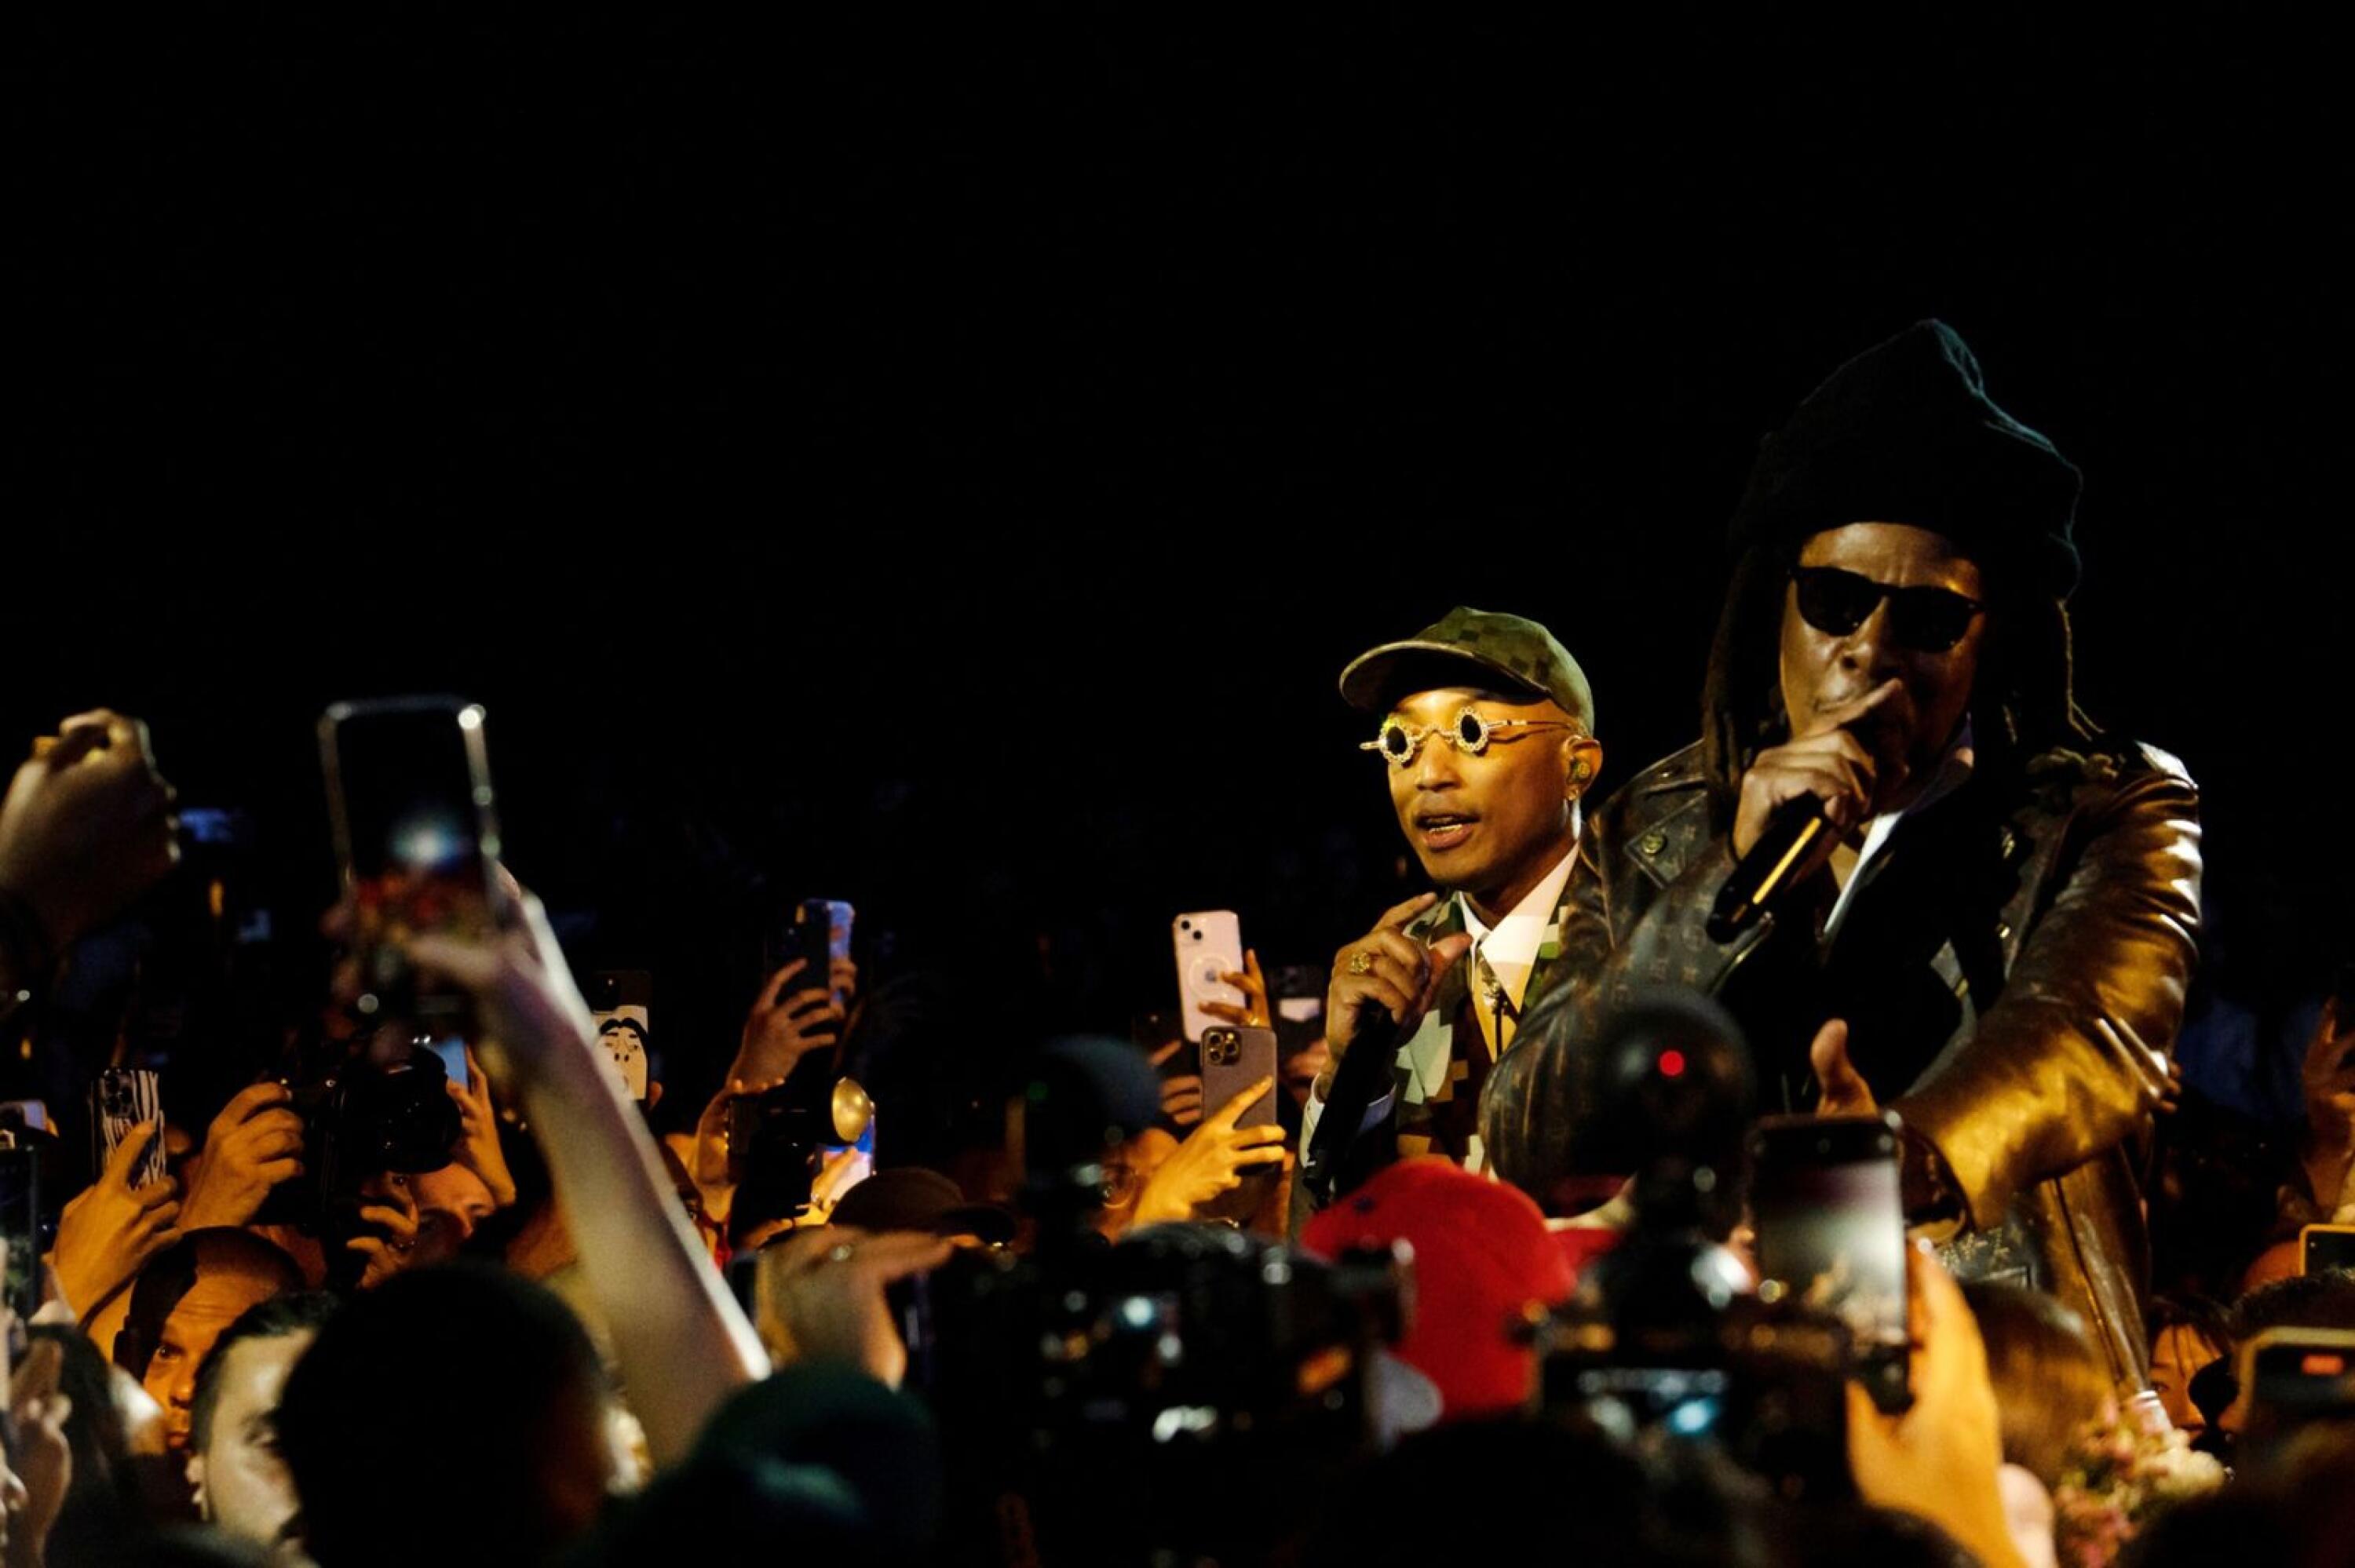 Irish rapper walks in Pharrell Williams' first Louis Vuitton show